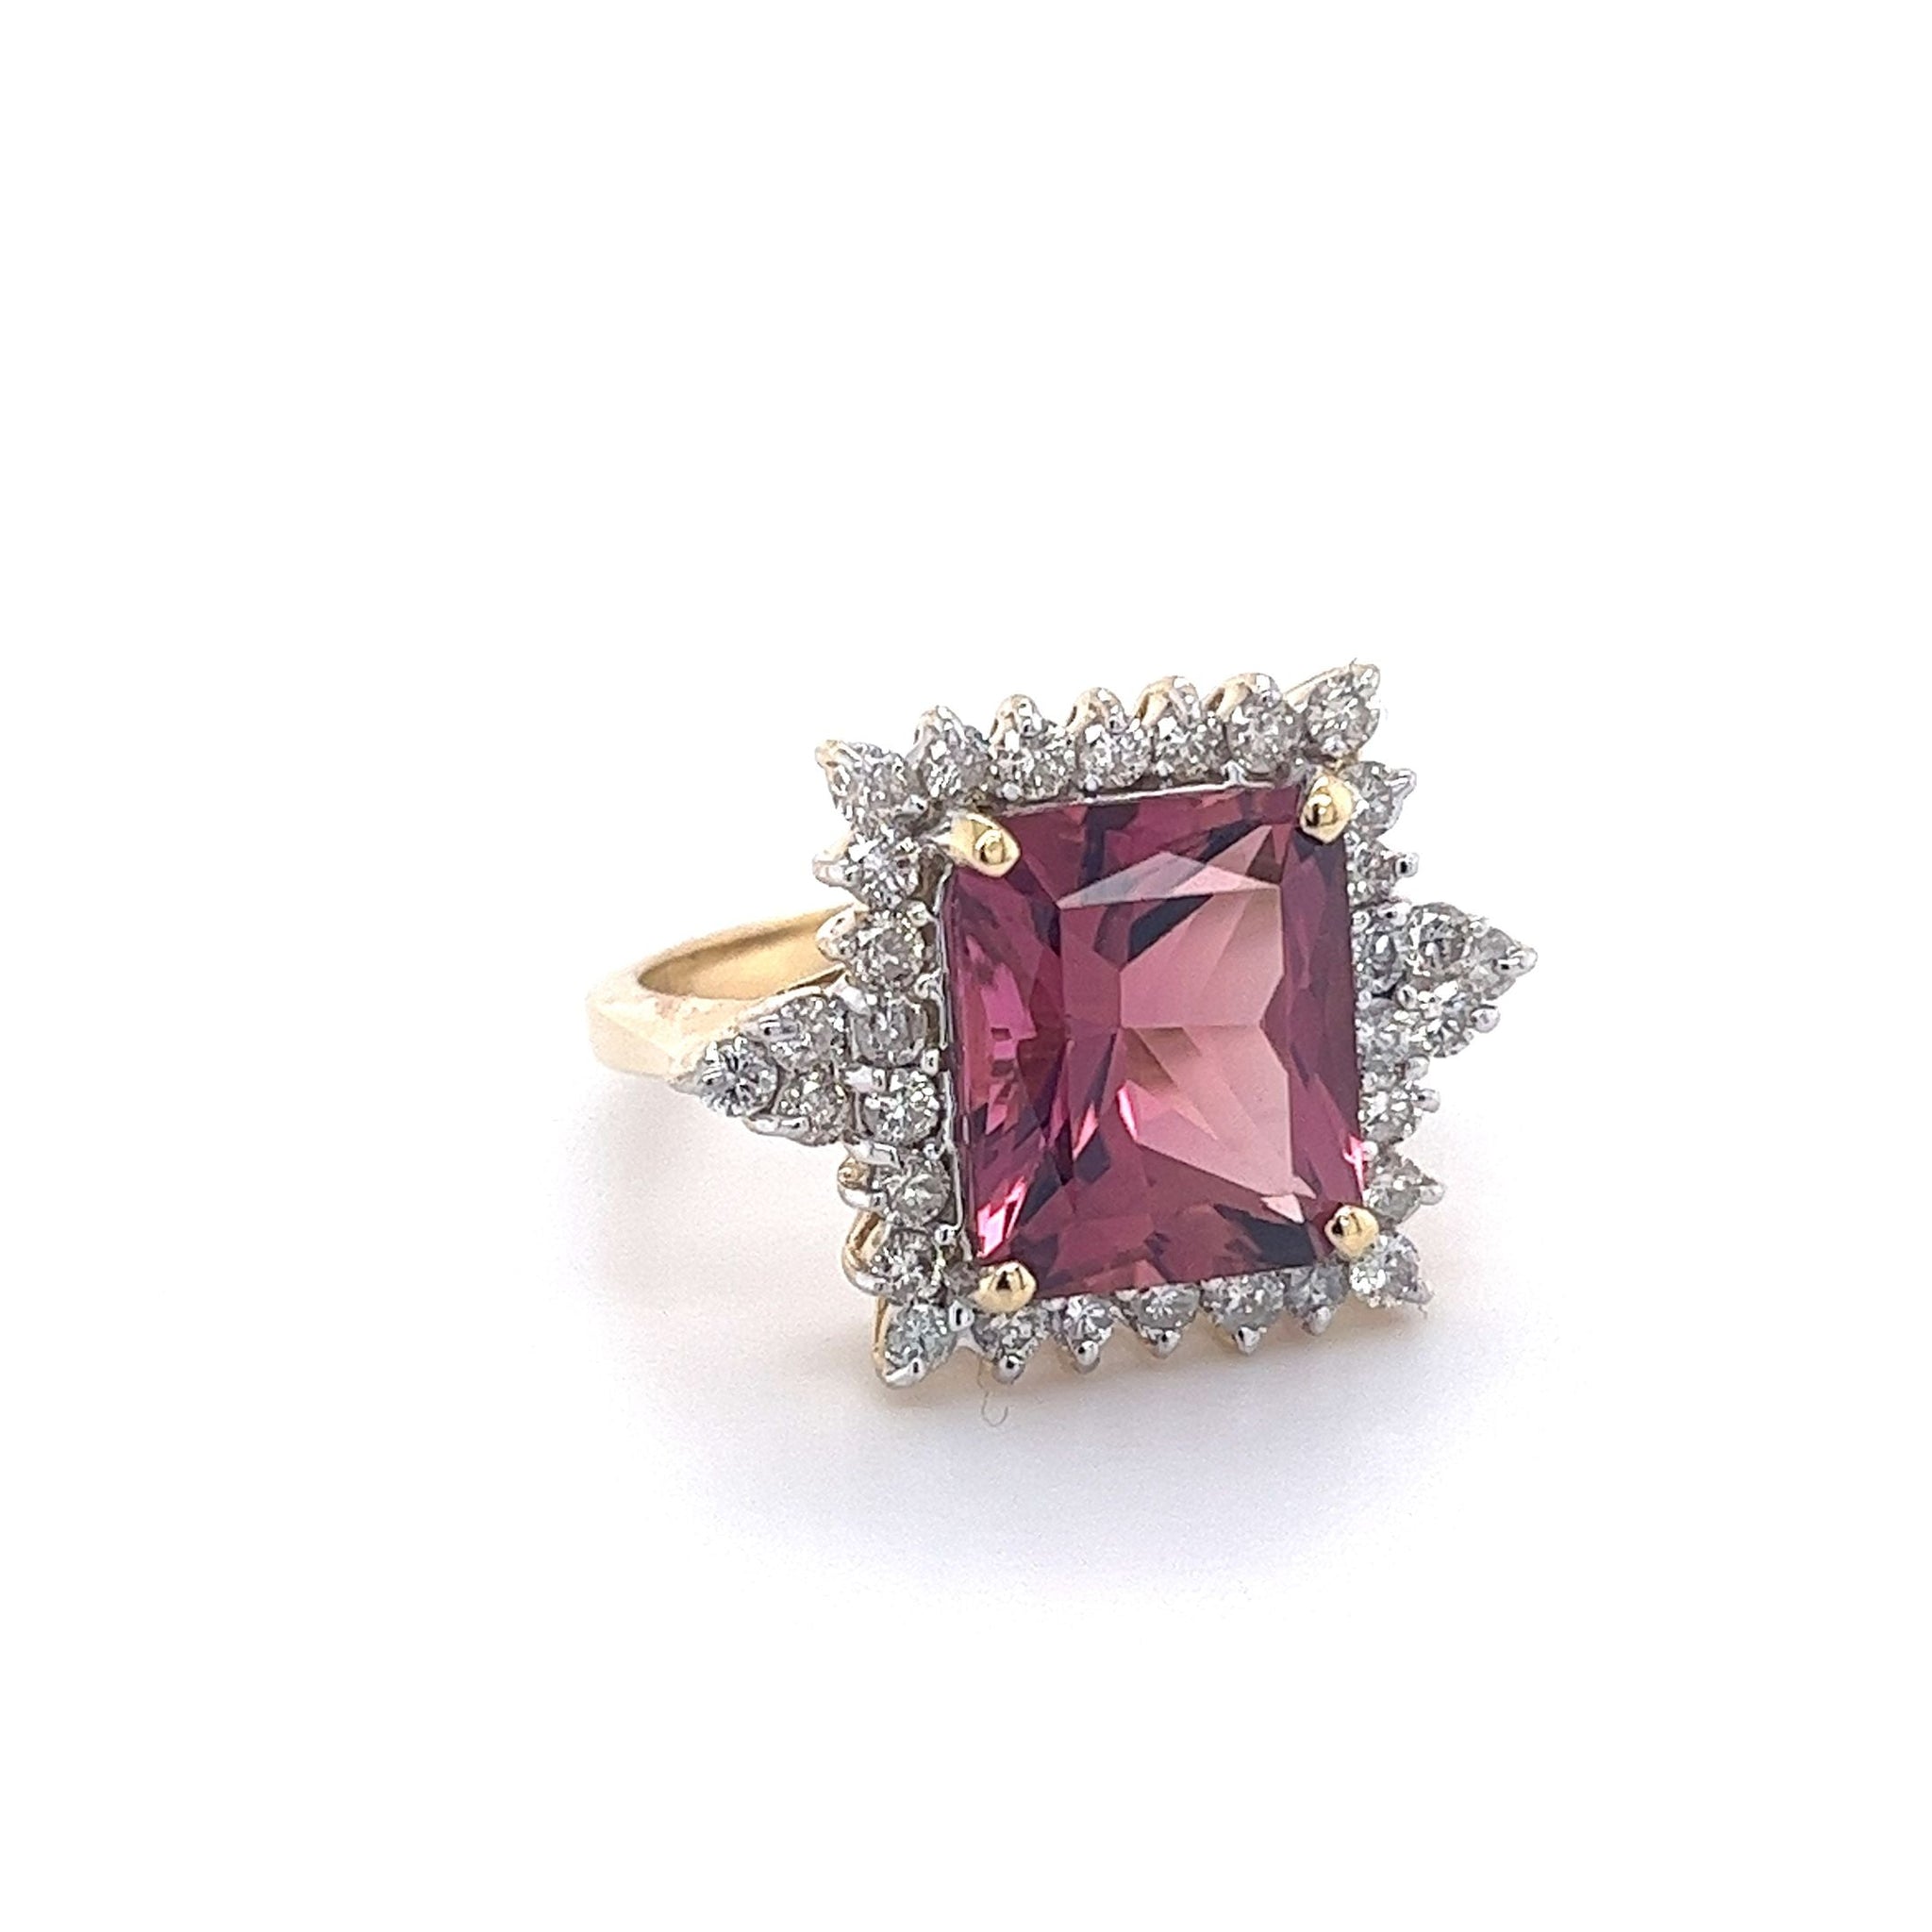 Vivid Pink 7 Carat Radiant Cut Tourmaline Ring with Round Diamond Halo in 18K Gold